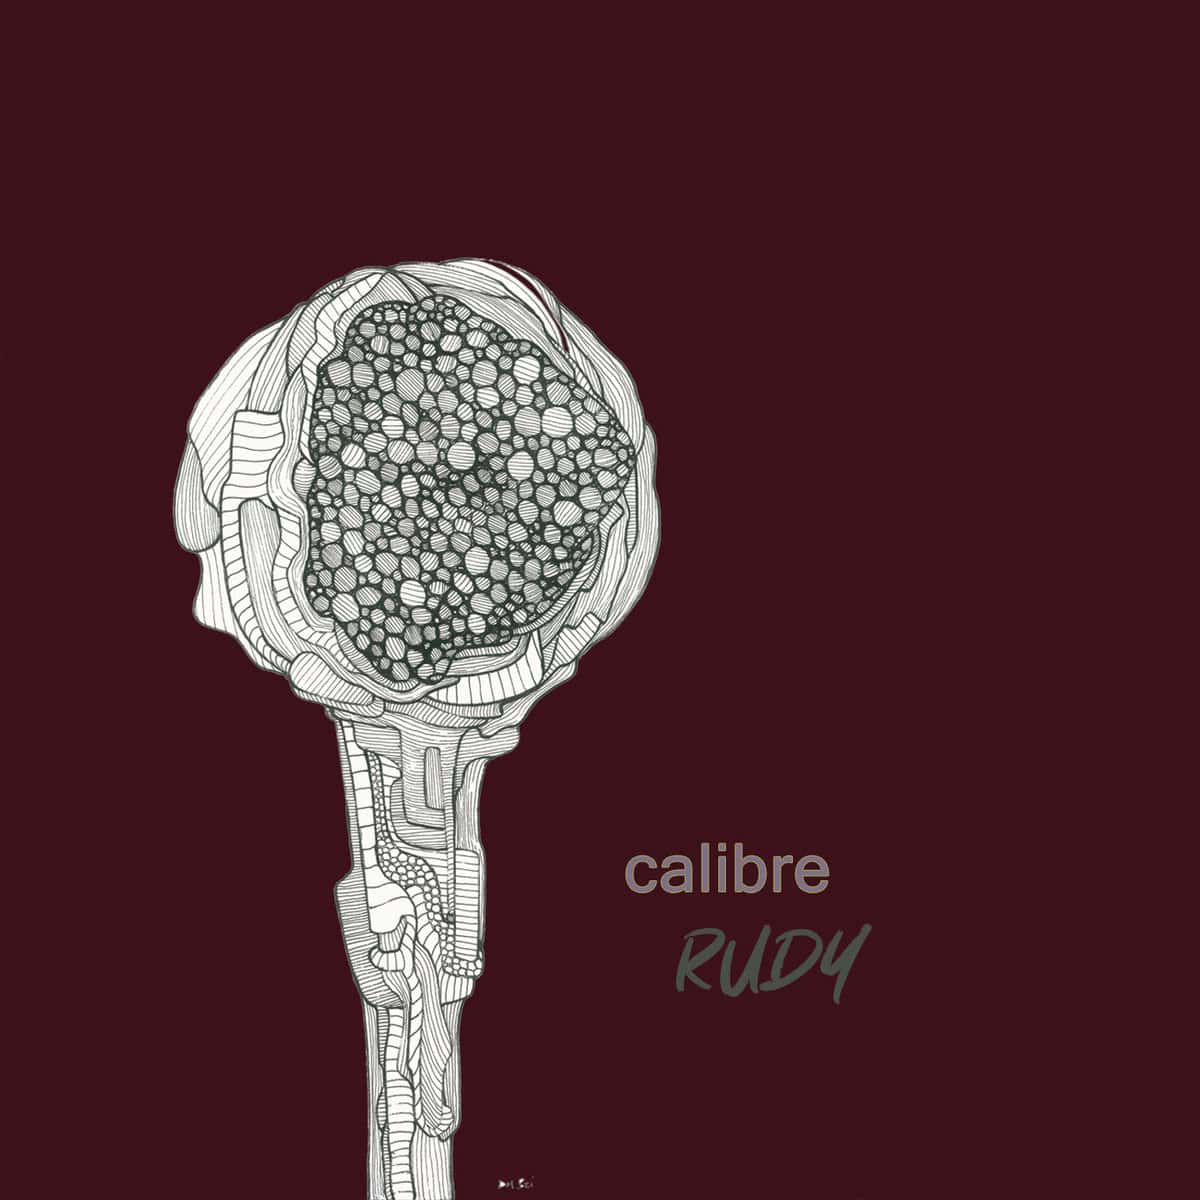 image cover: Calibre - Rudy on Calibre